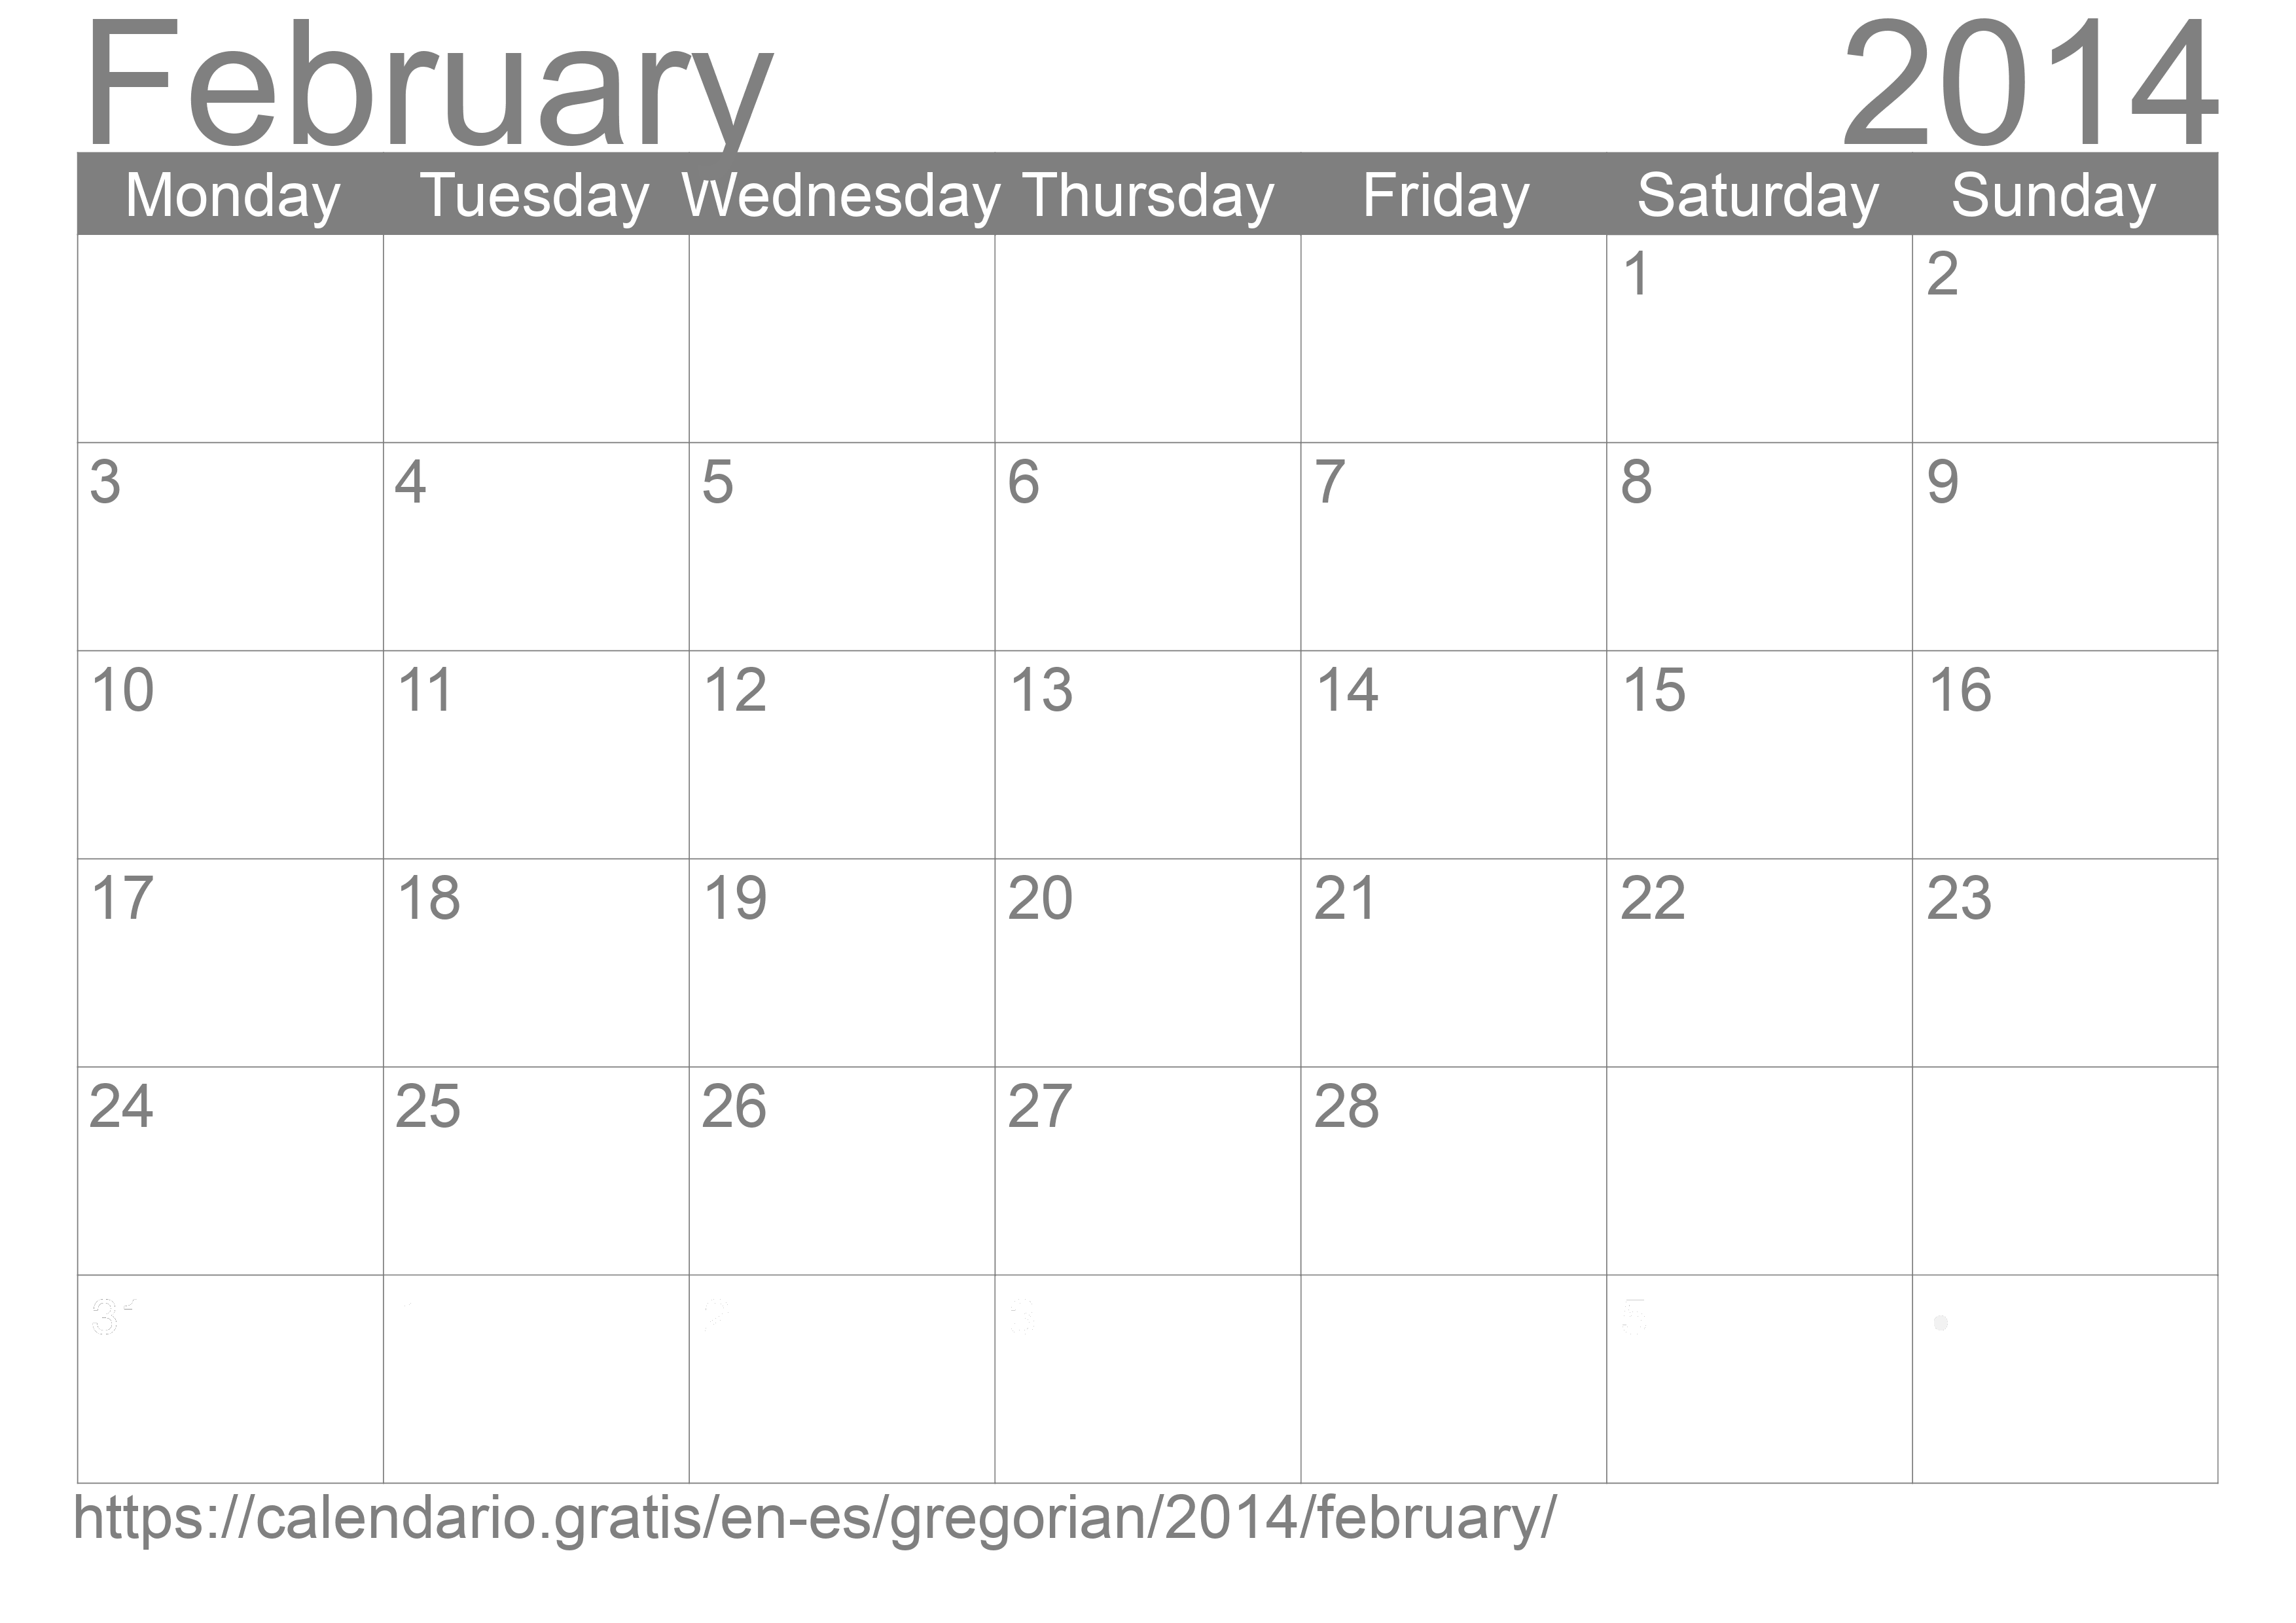 Calendar February 2014 to print